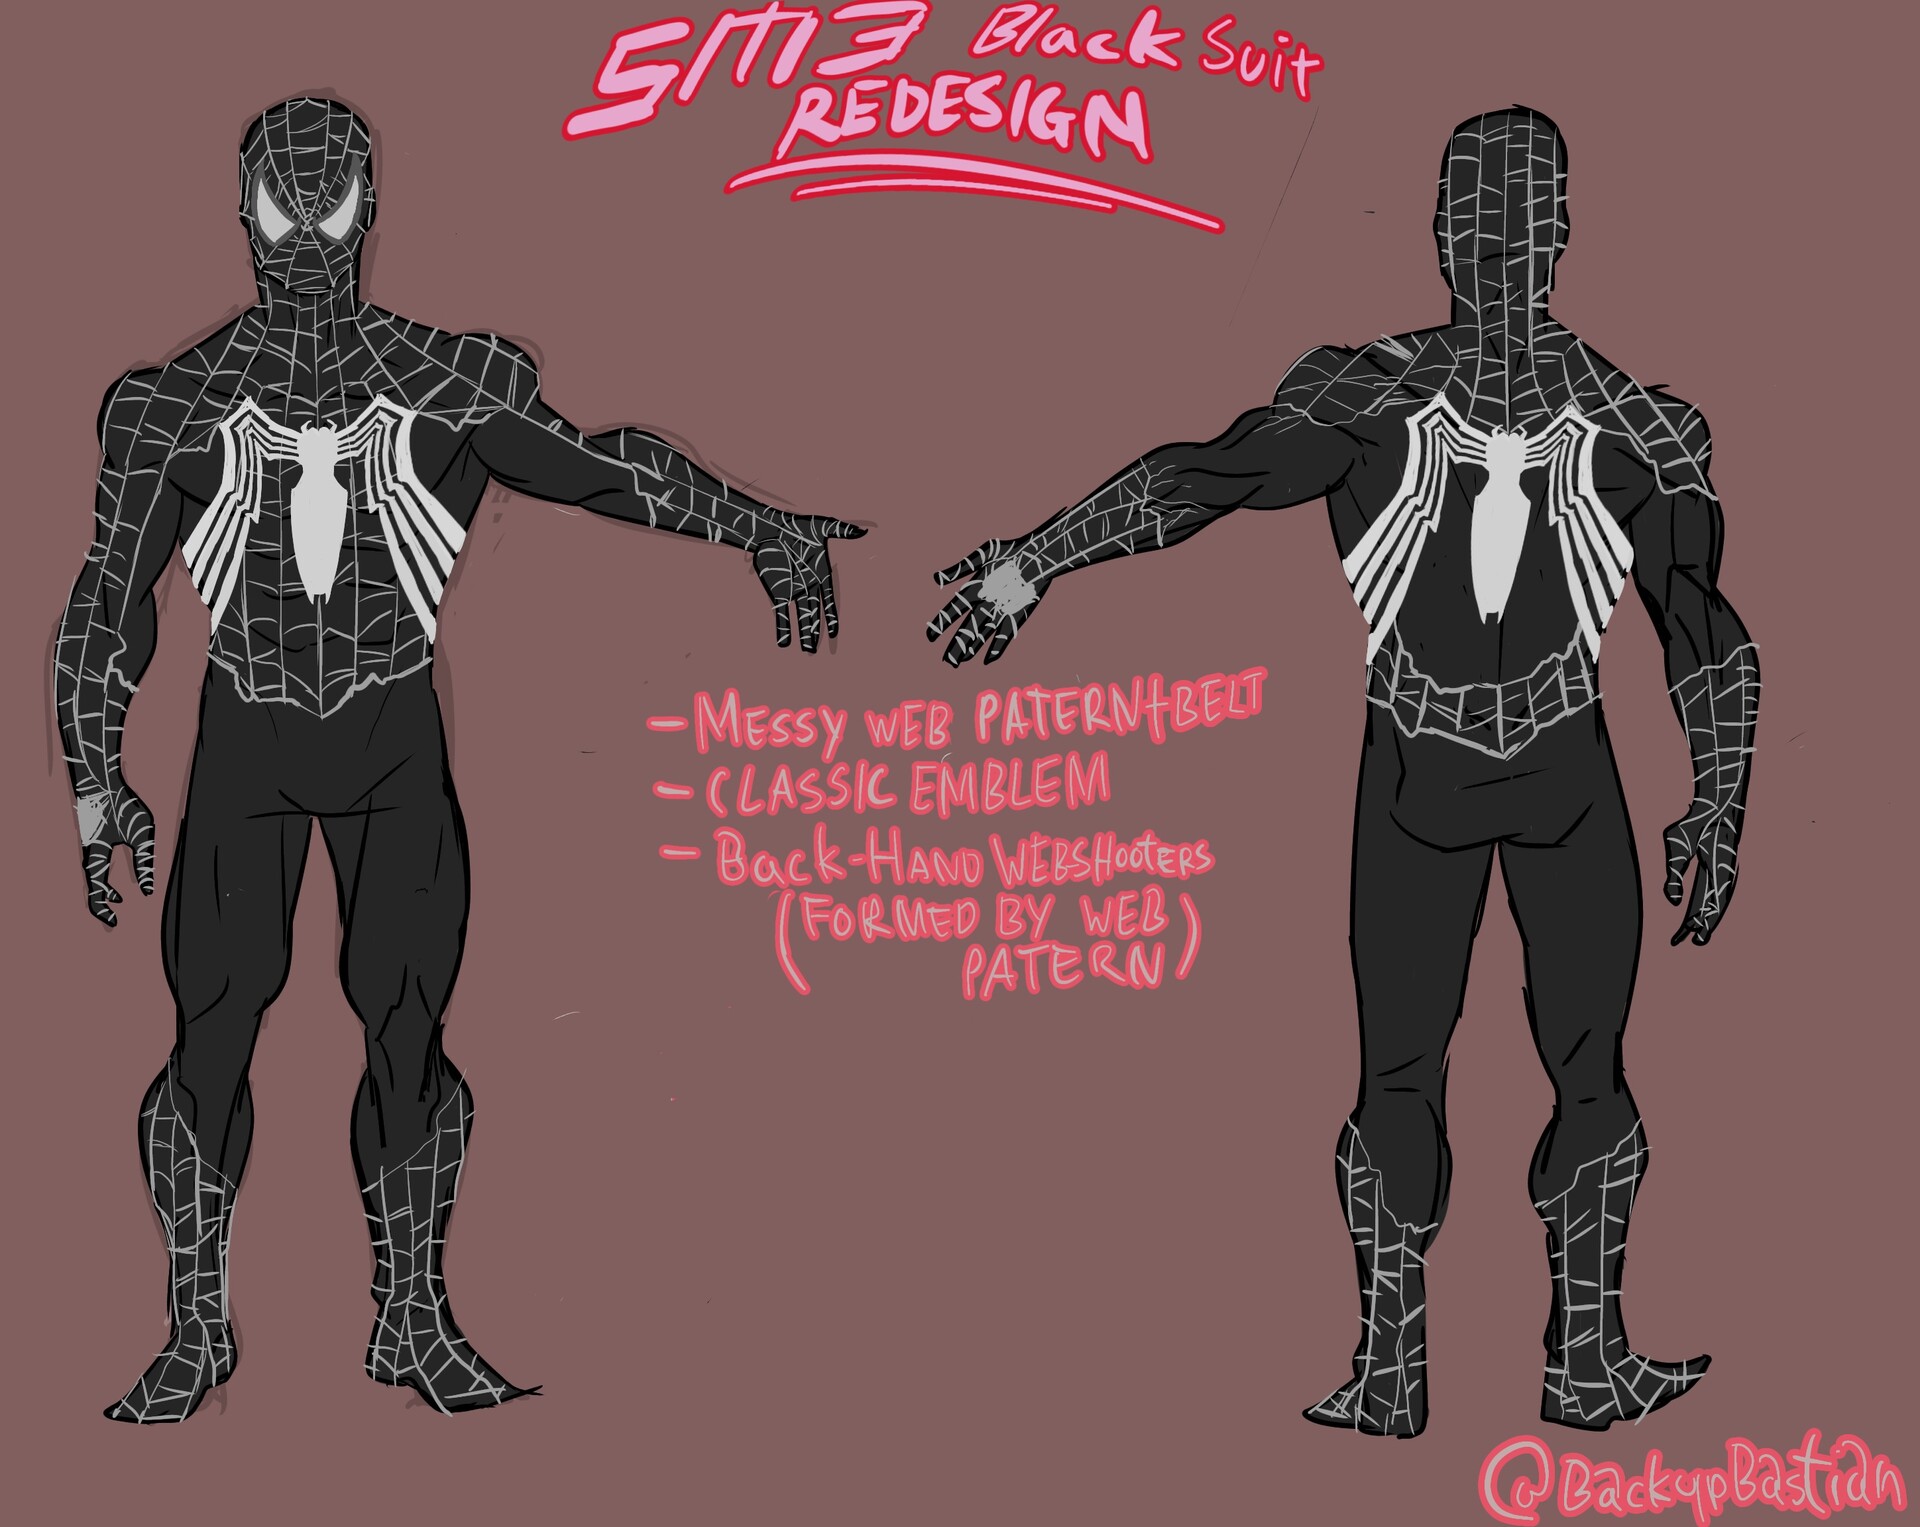 ArtStation - Spider-Man 3 Black Suit Redesign